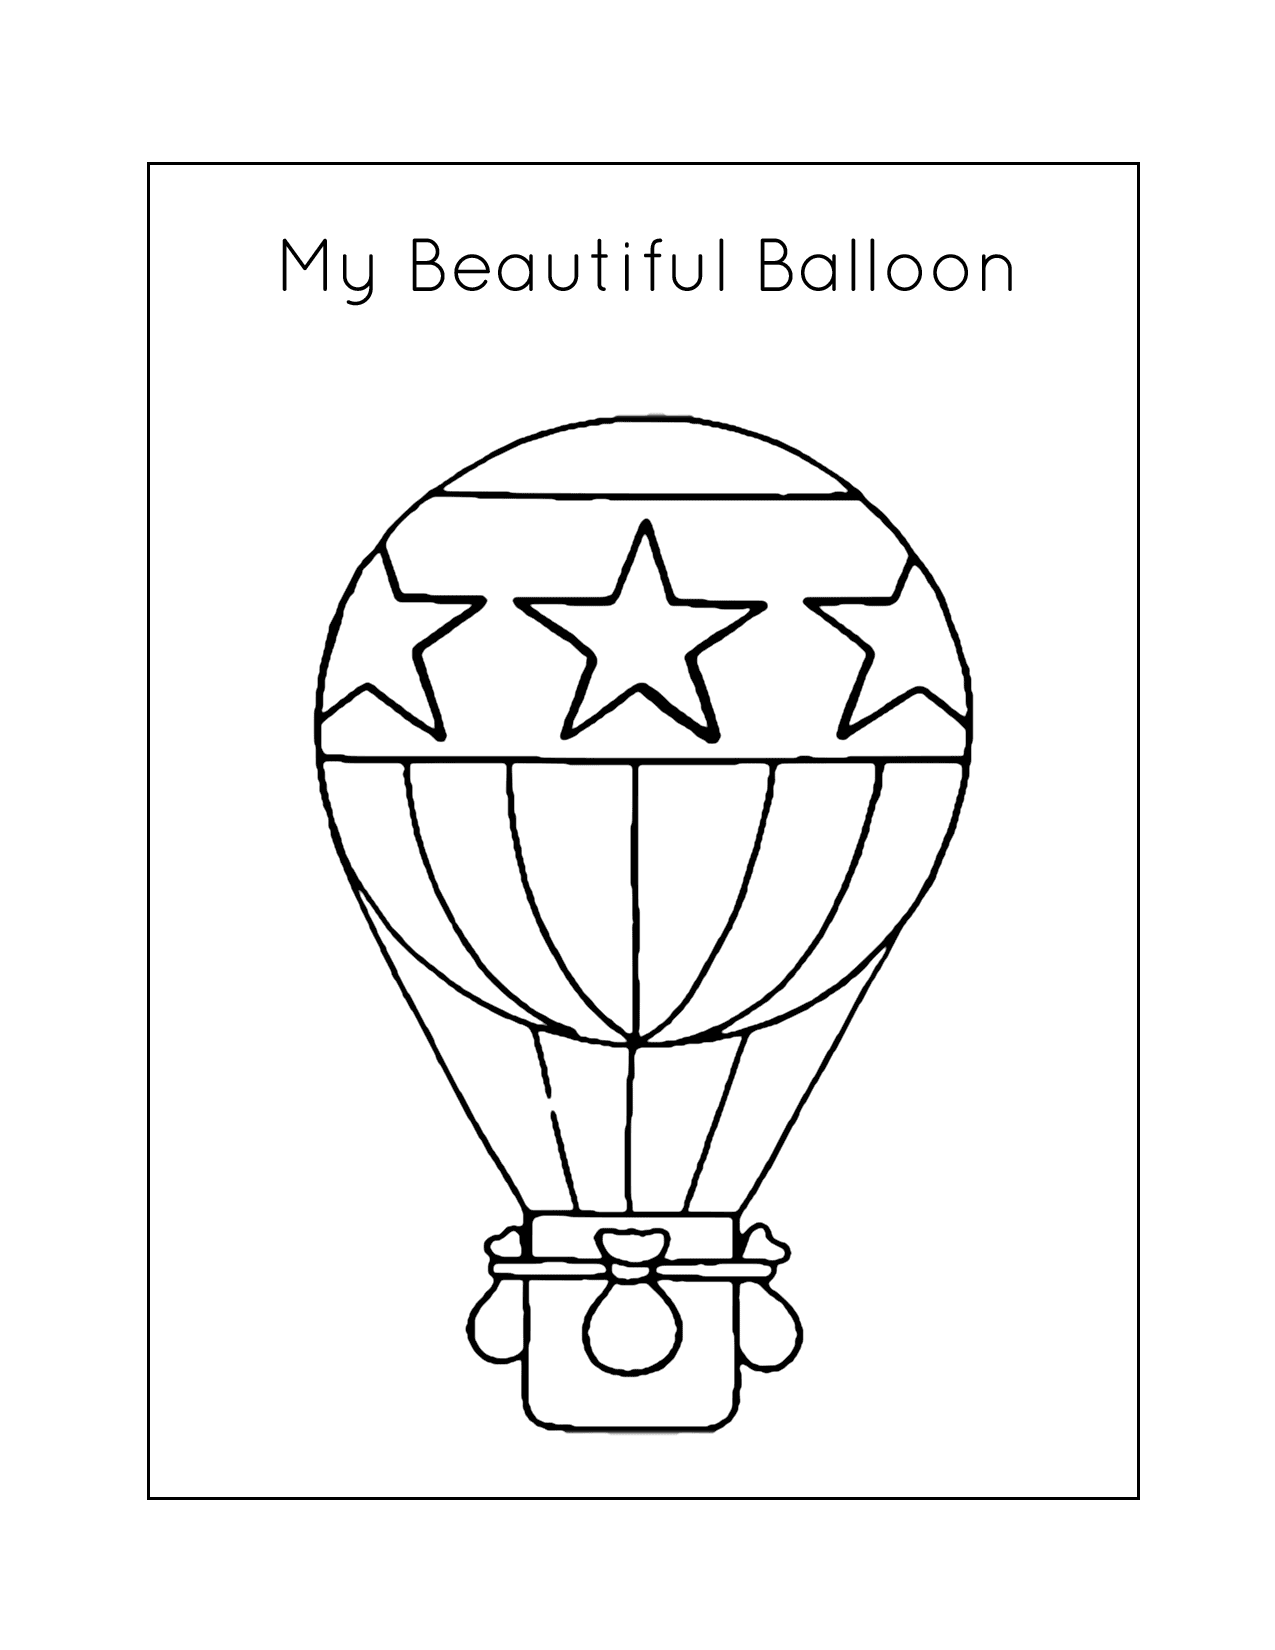 My Beautiful Hot Air Balloon Coloring Page